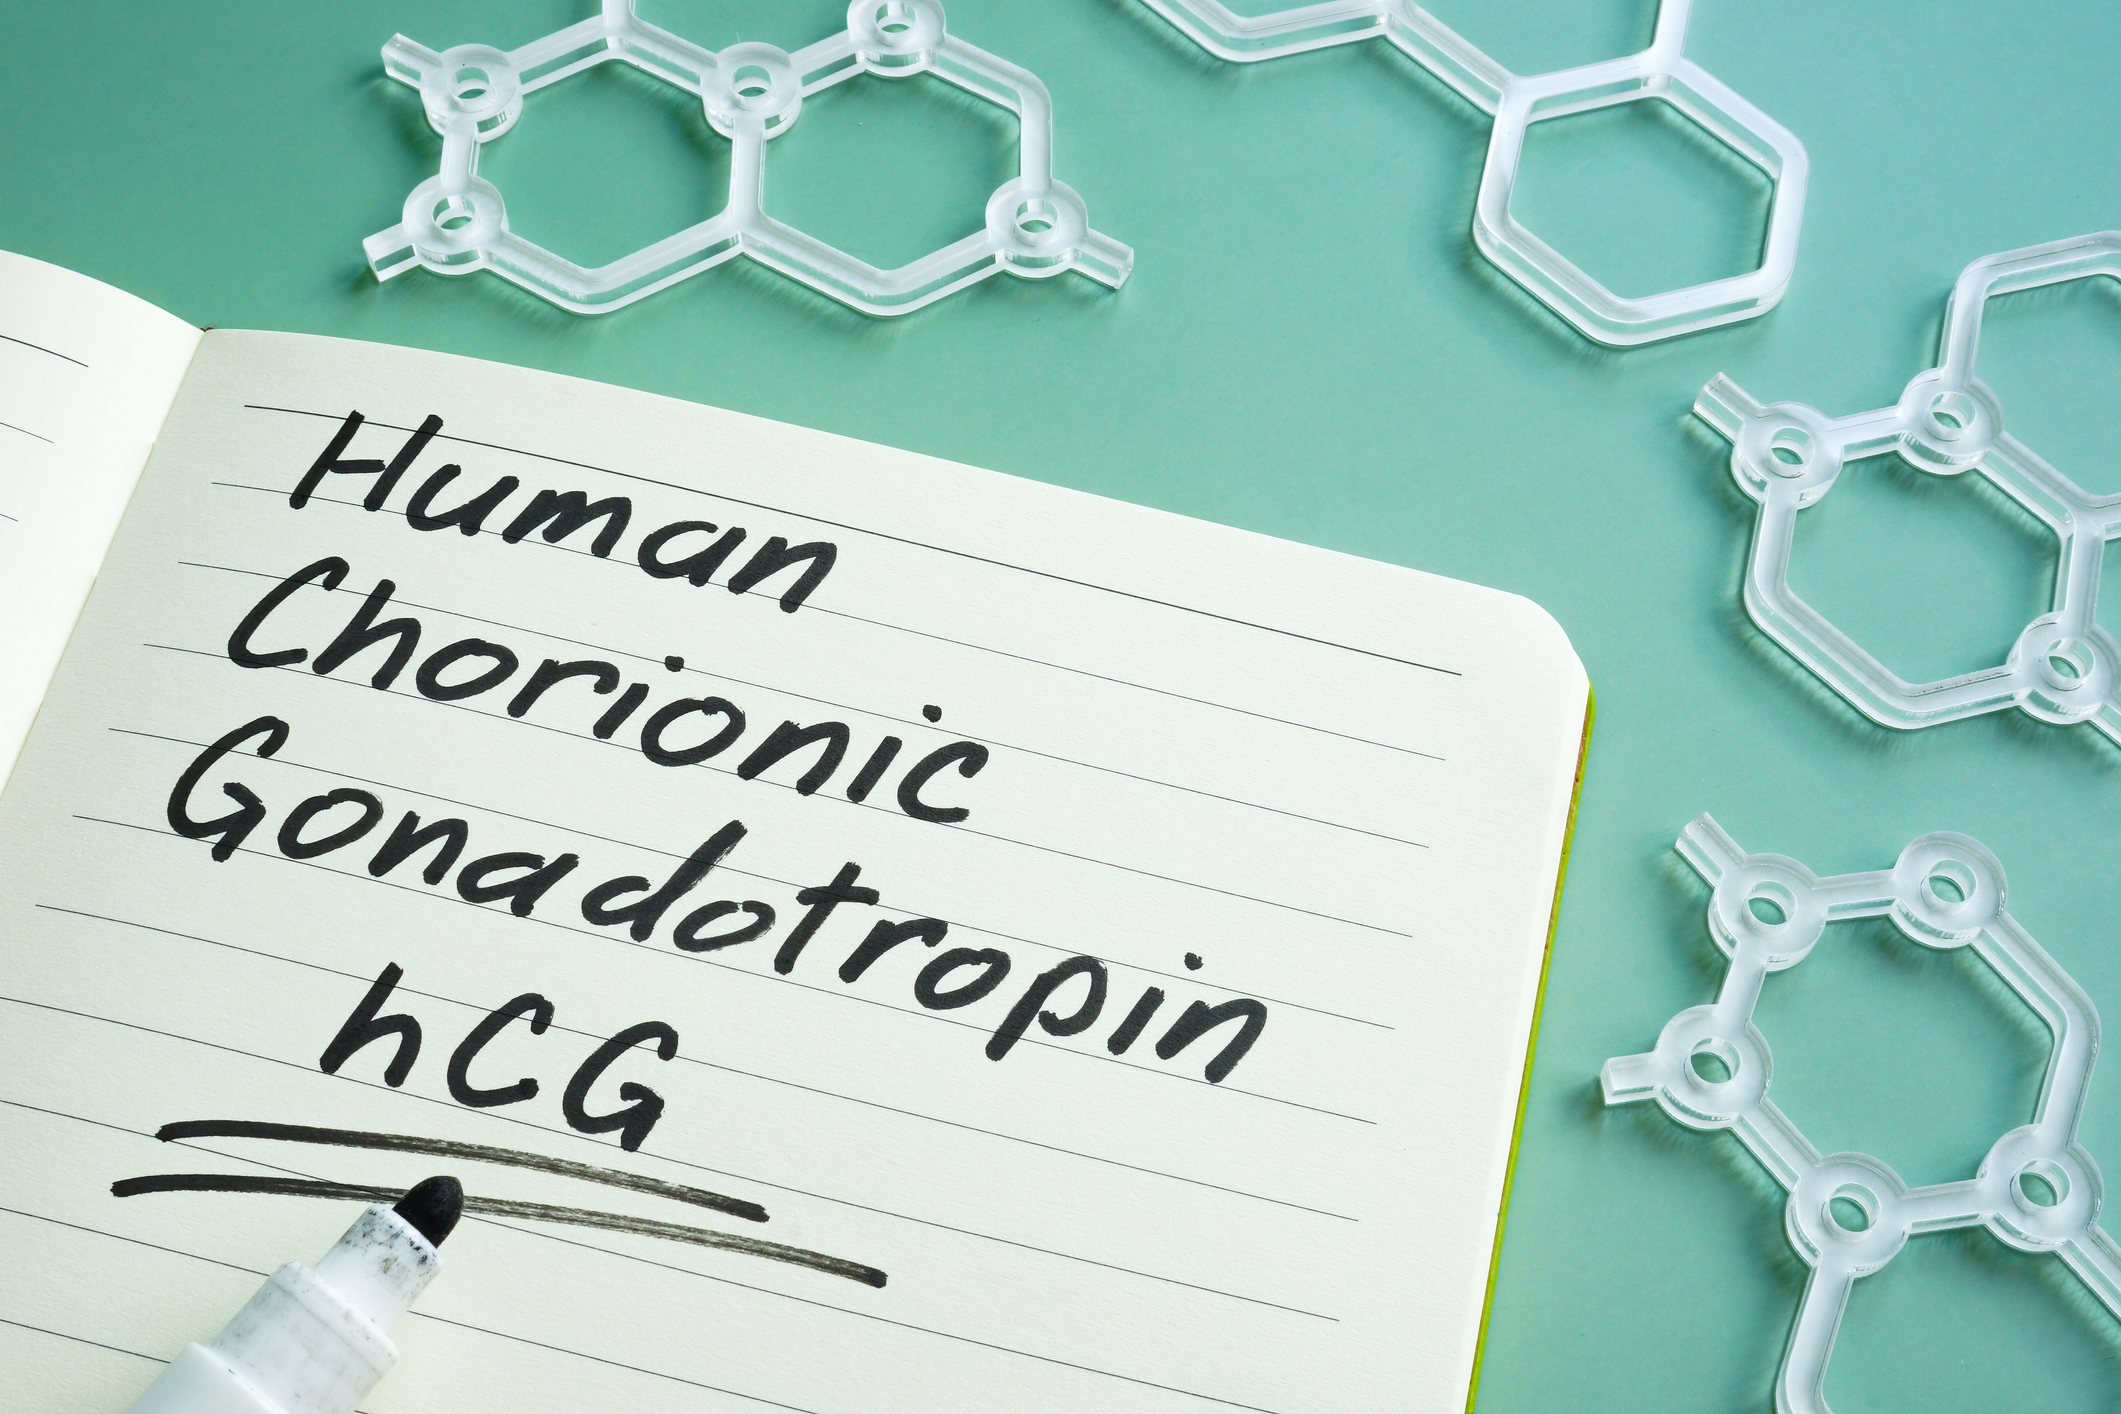 Human Chorionic Gonadotropin hCG written on a page